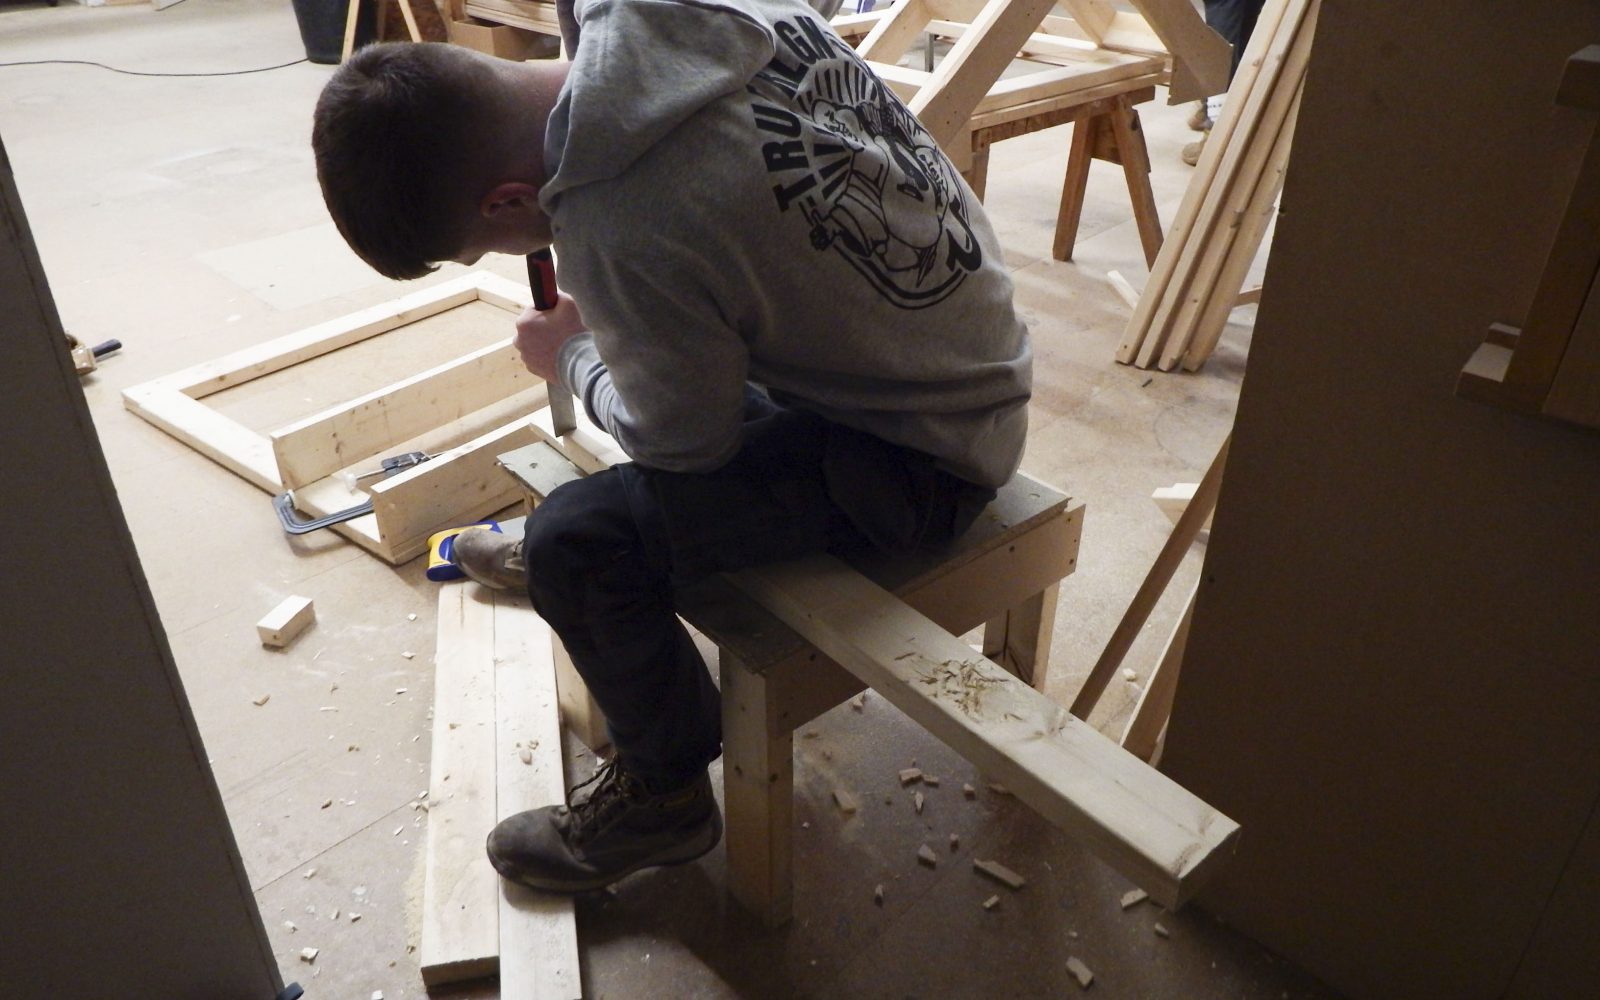 Student chiseling wood